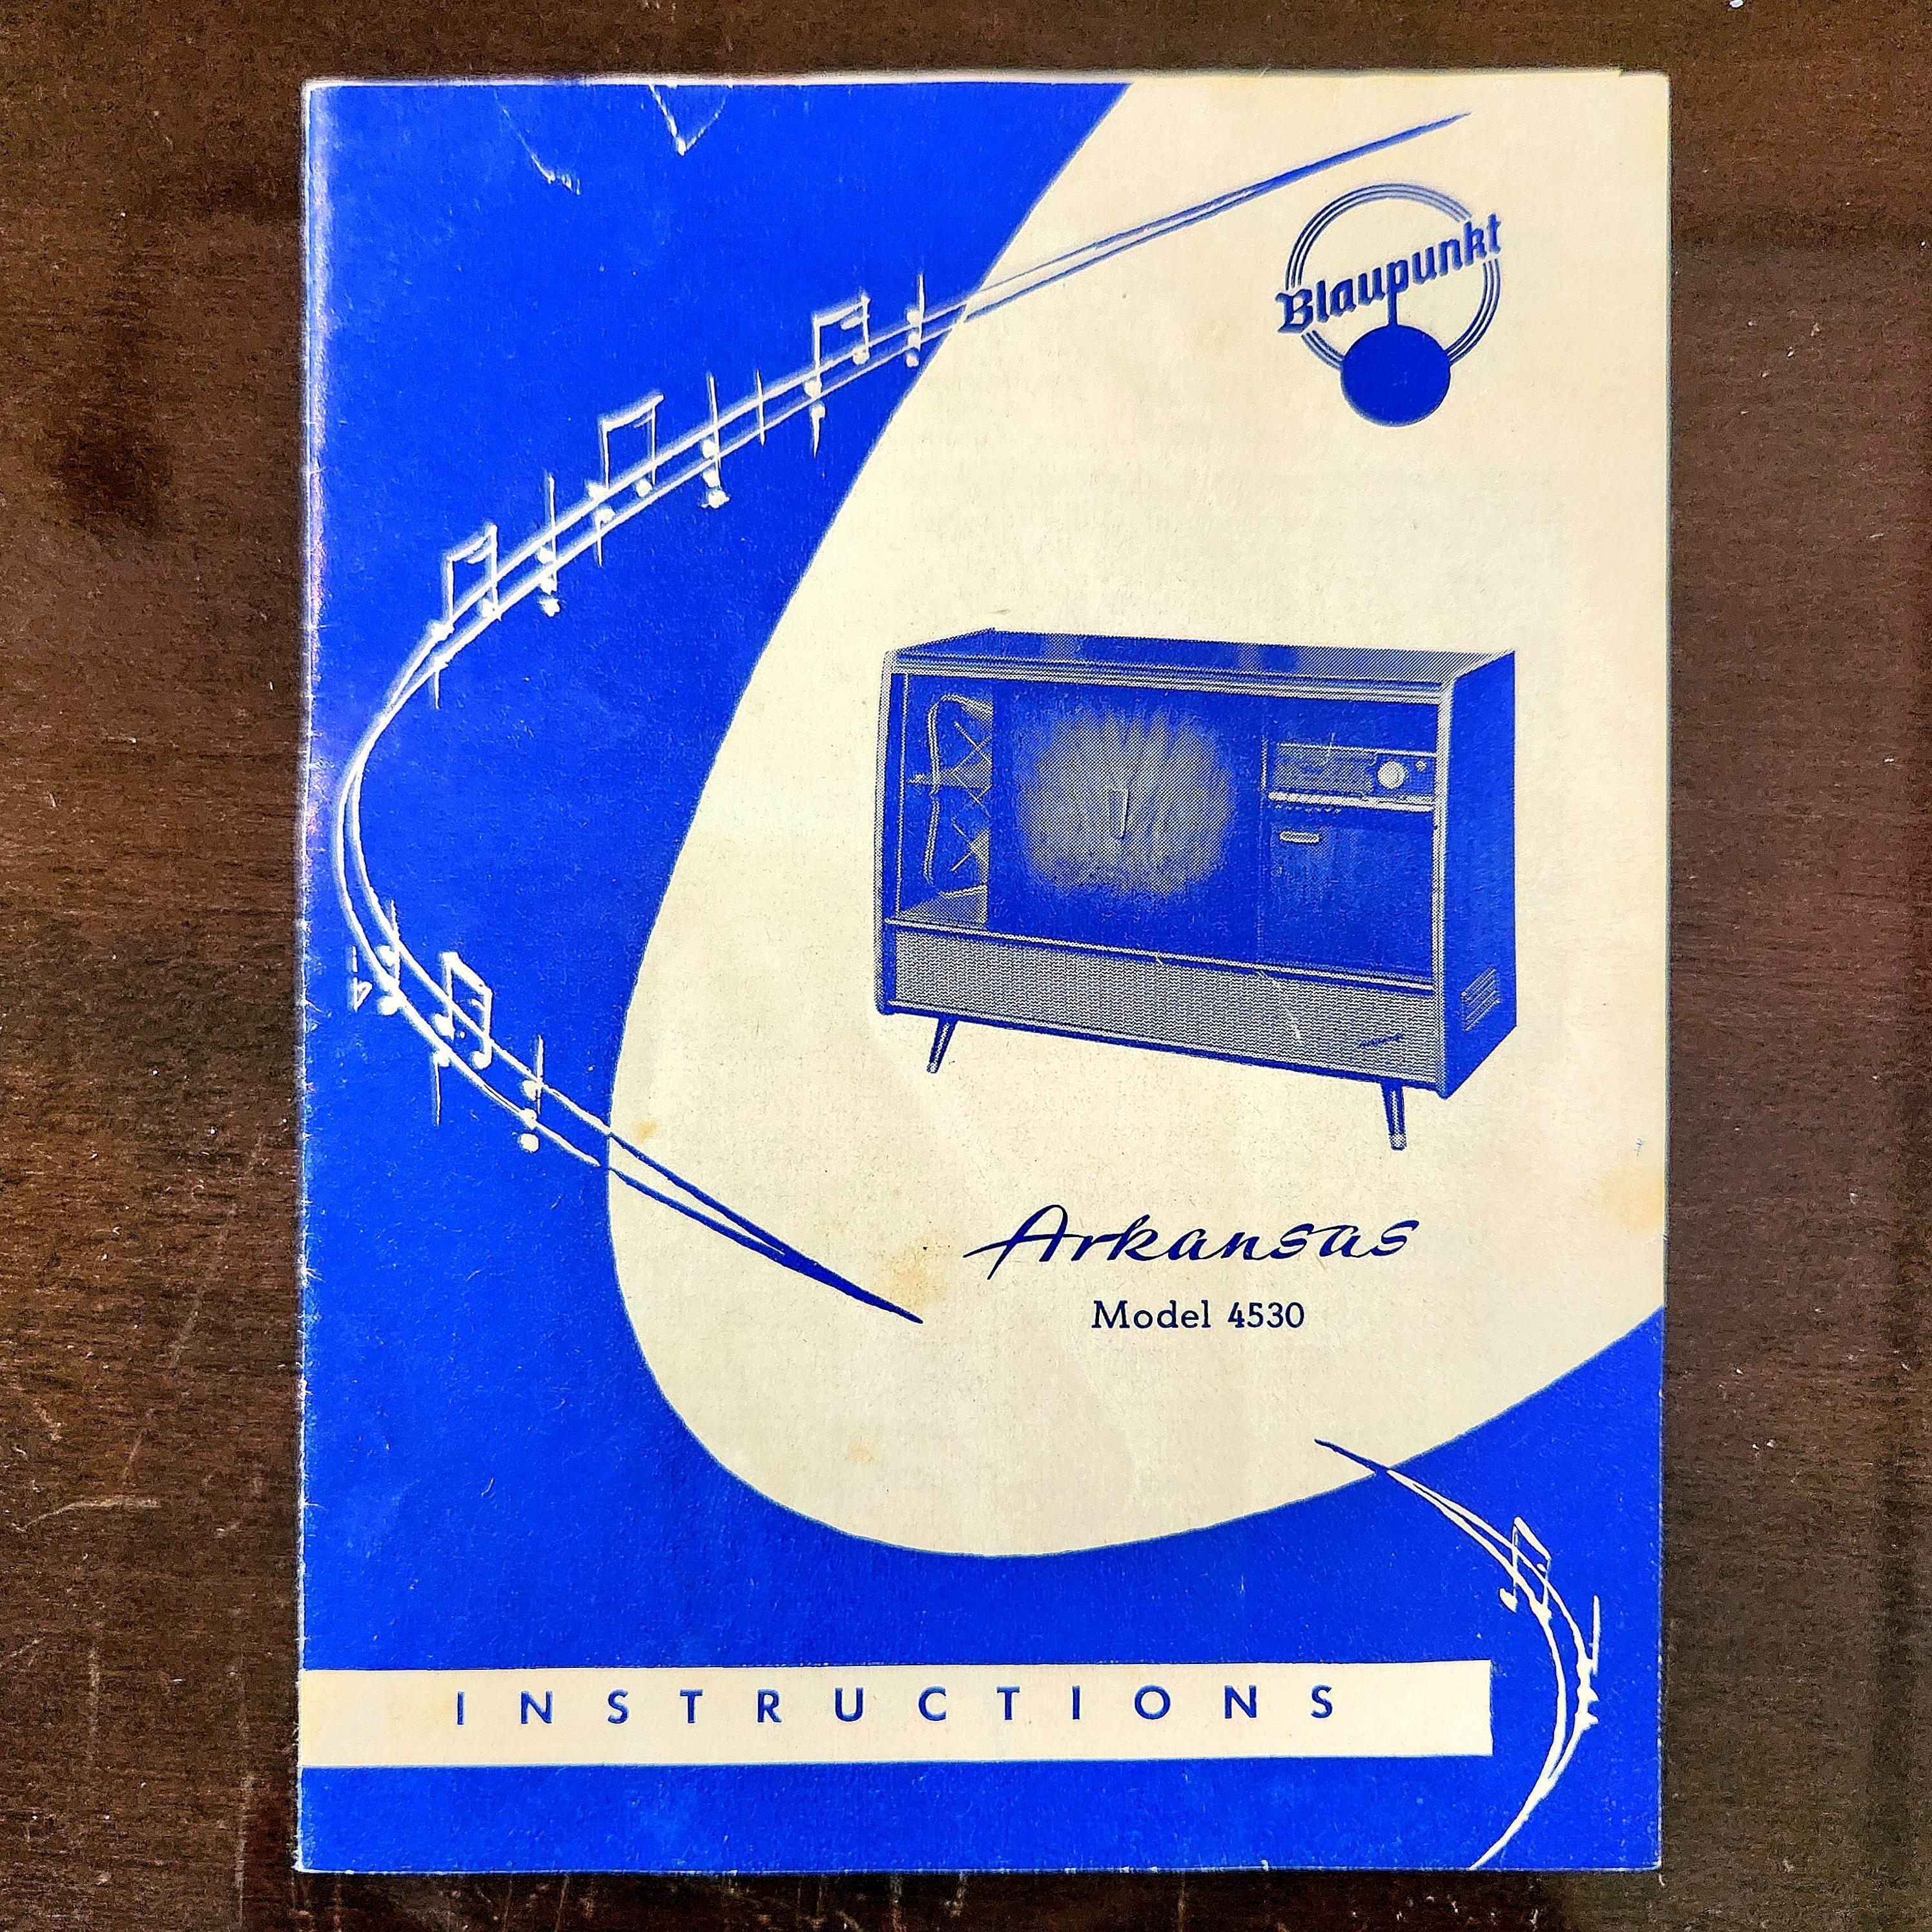 German Mid Century Modern Blaupunkt stereo console record player gramophone bluetooth